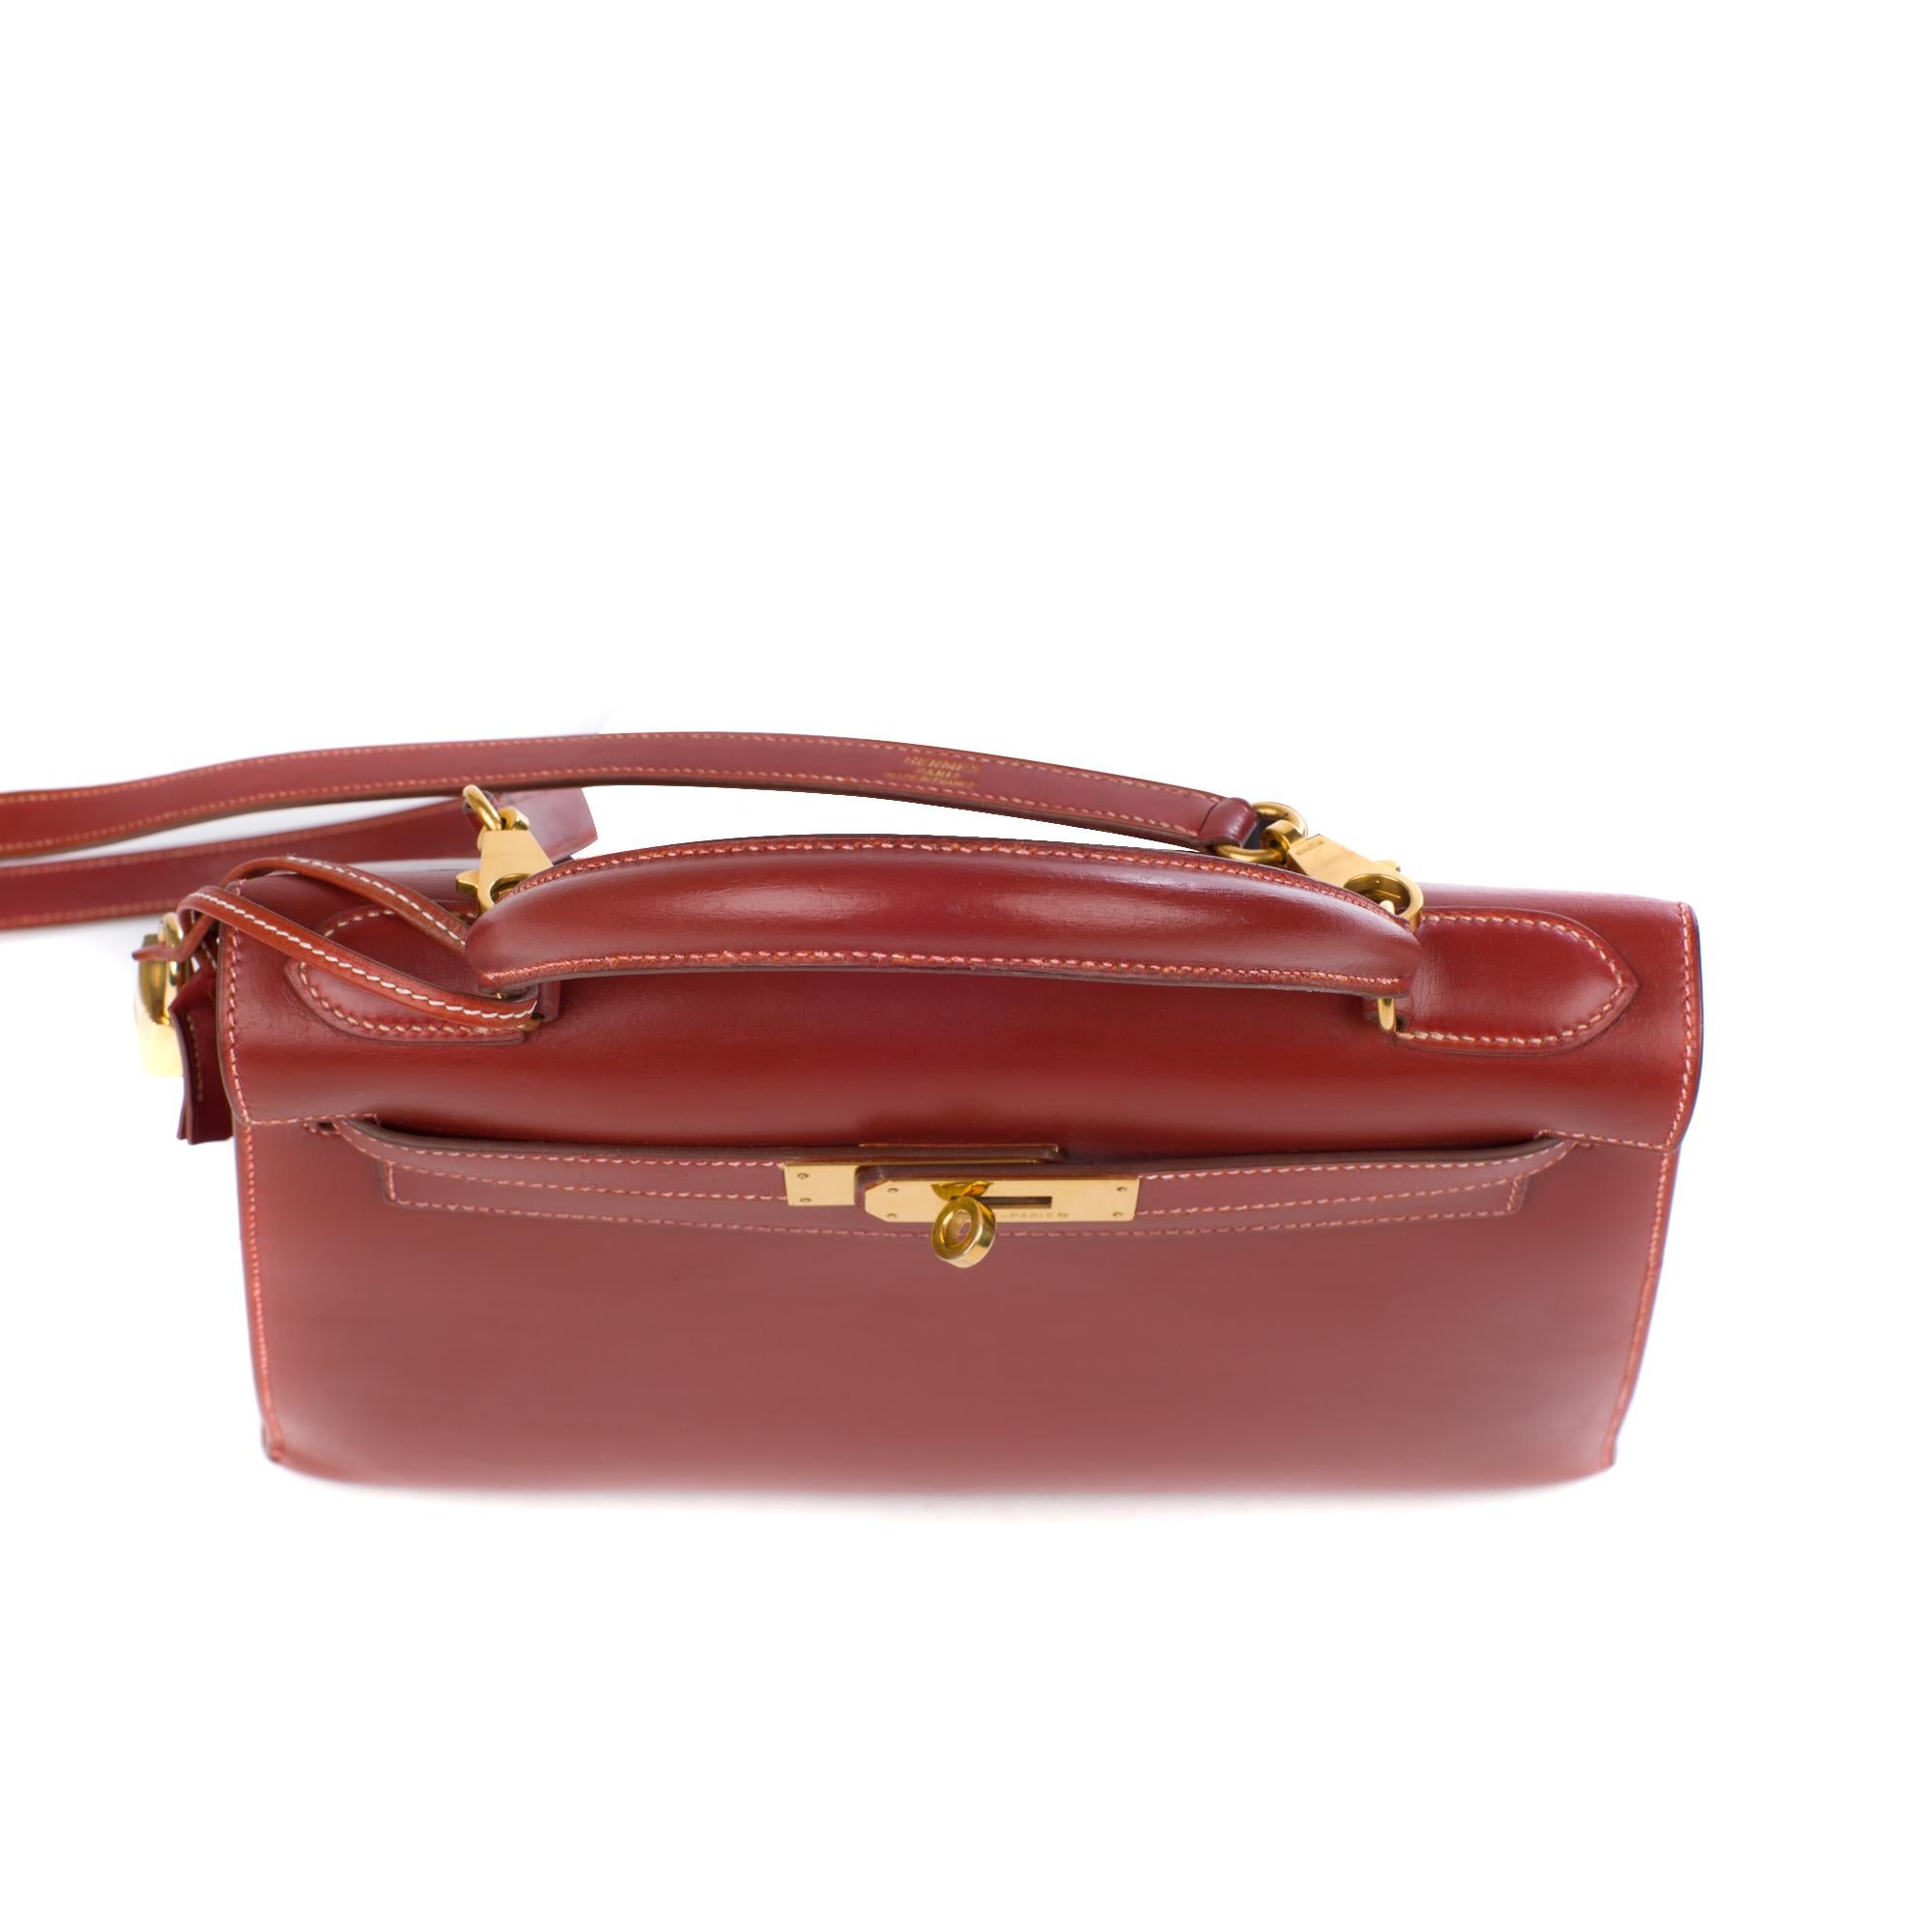 Hermes kelly 28cm Red Brick box Leather Handbag 3